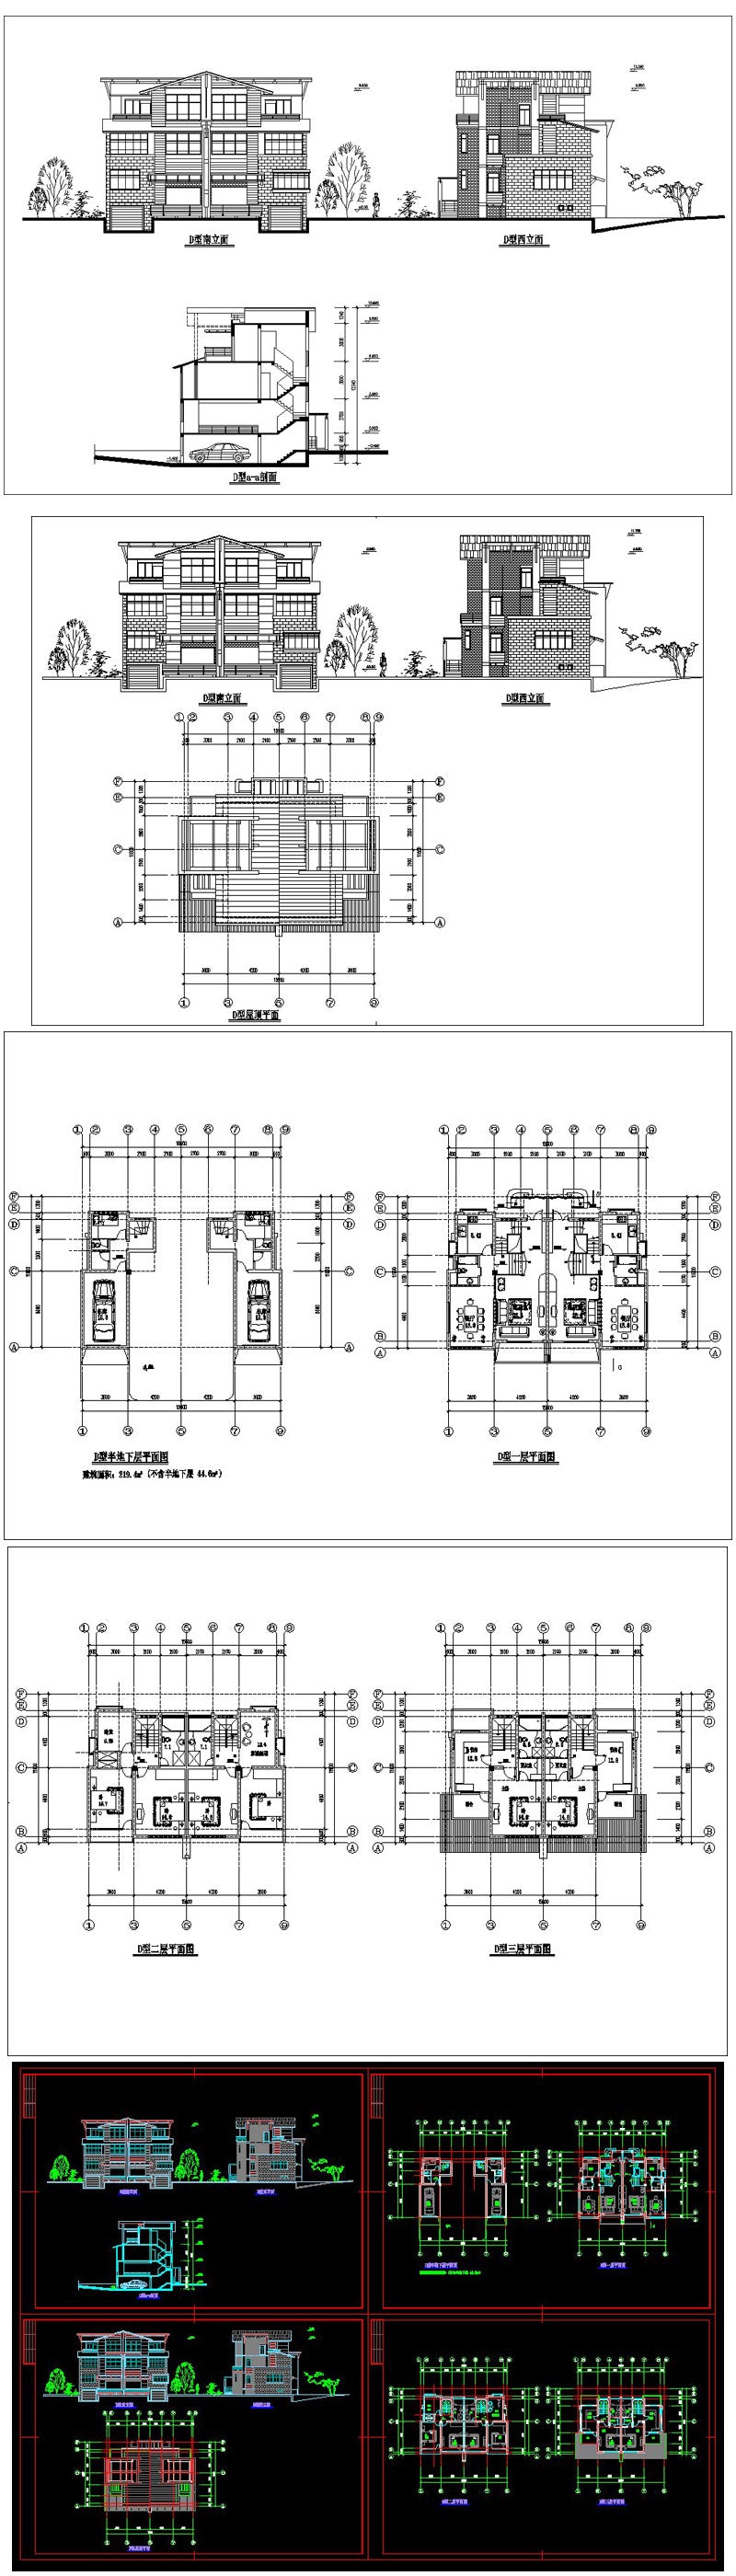 ★【Villa CAD Design,Details Project V.11】Chateau,Manor,Mansion,Villa@Autocad Blocks,Drawings,CAD Details,Elevation